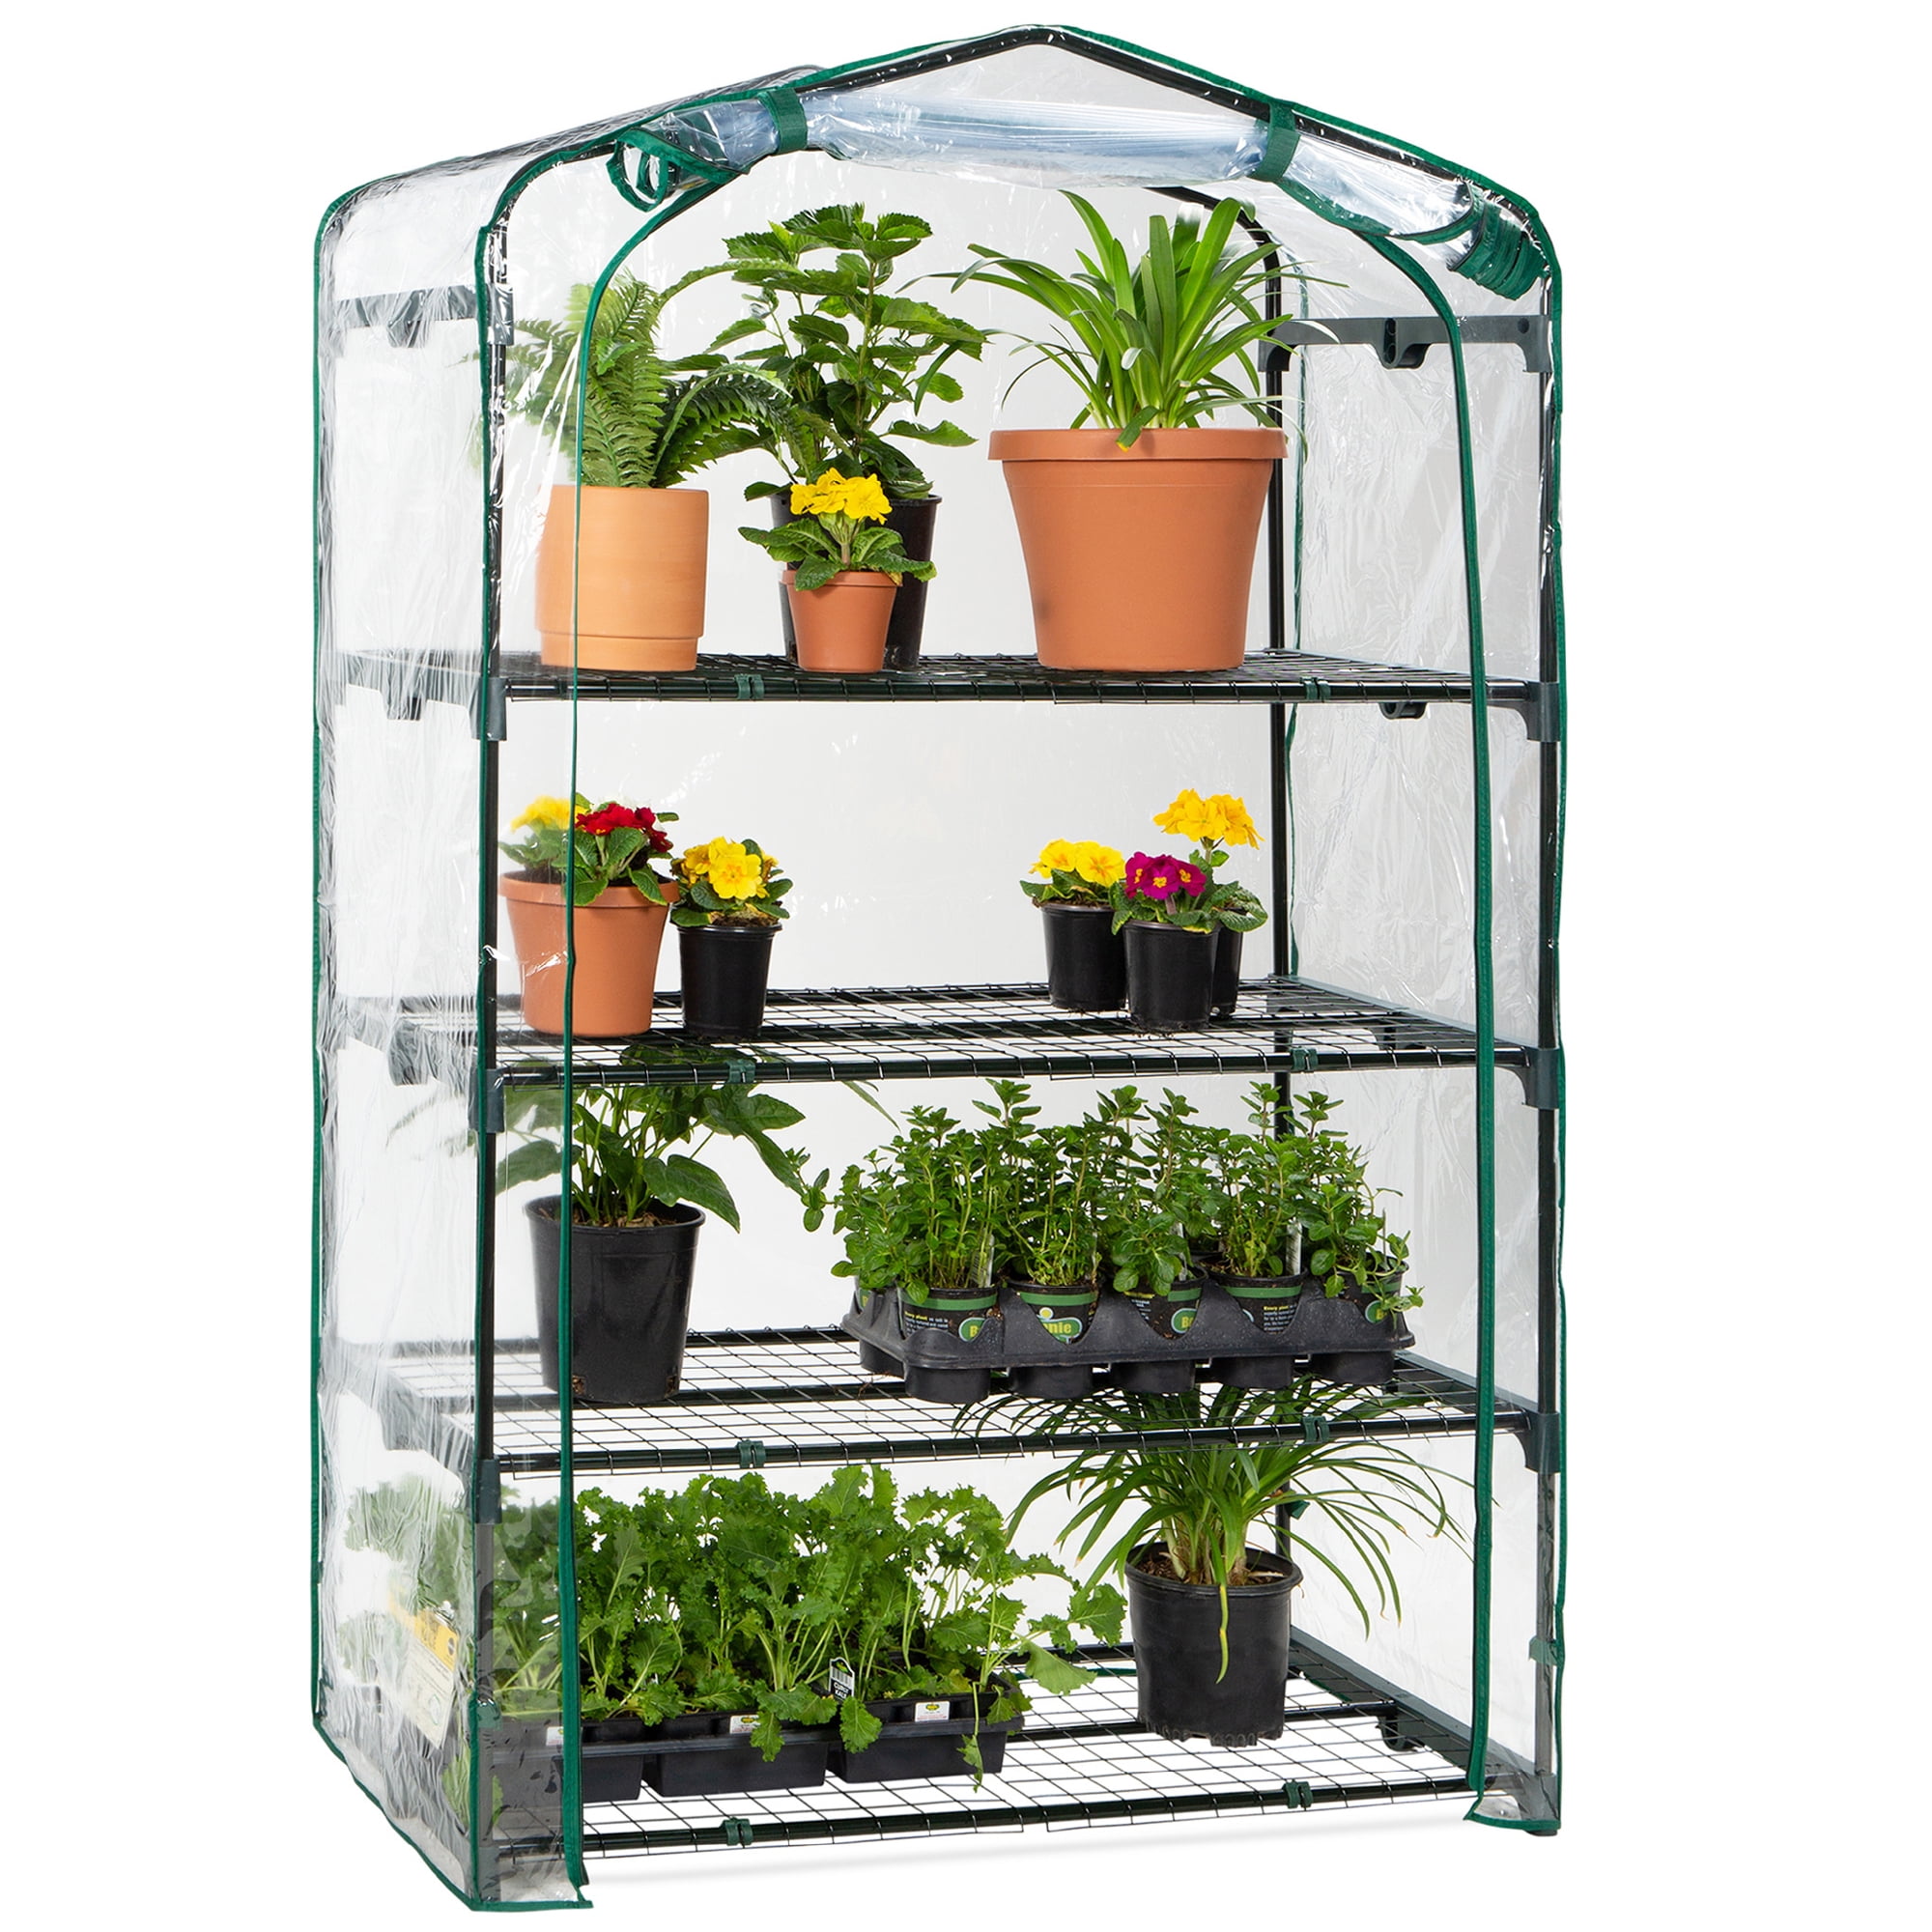 6/8 Shelves Weather Resistant Walk In Greenhouse PVC Plastic Garden Grow House 